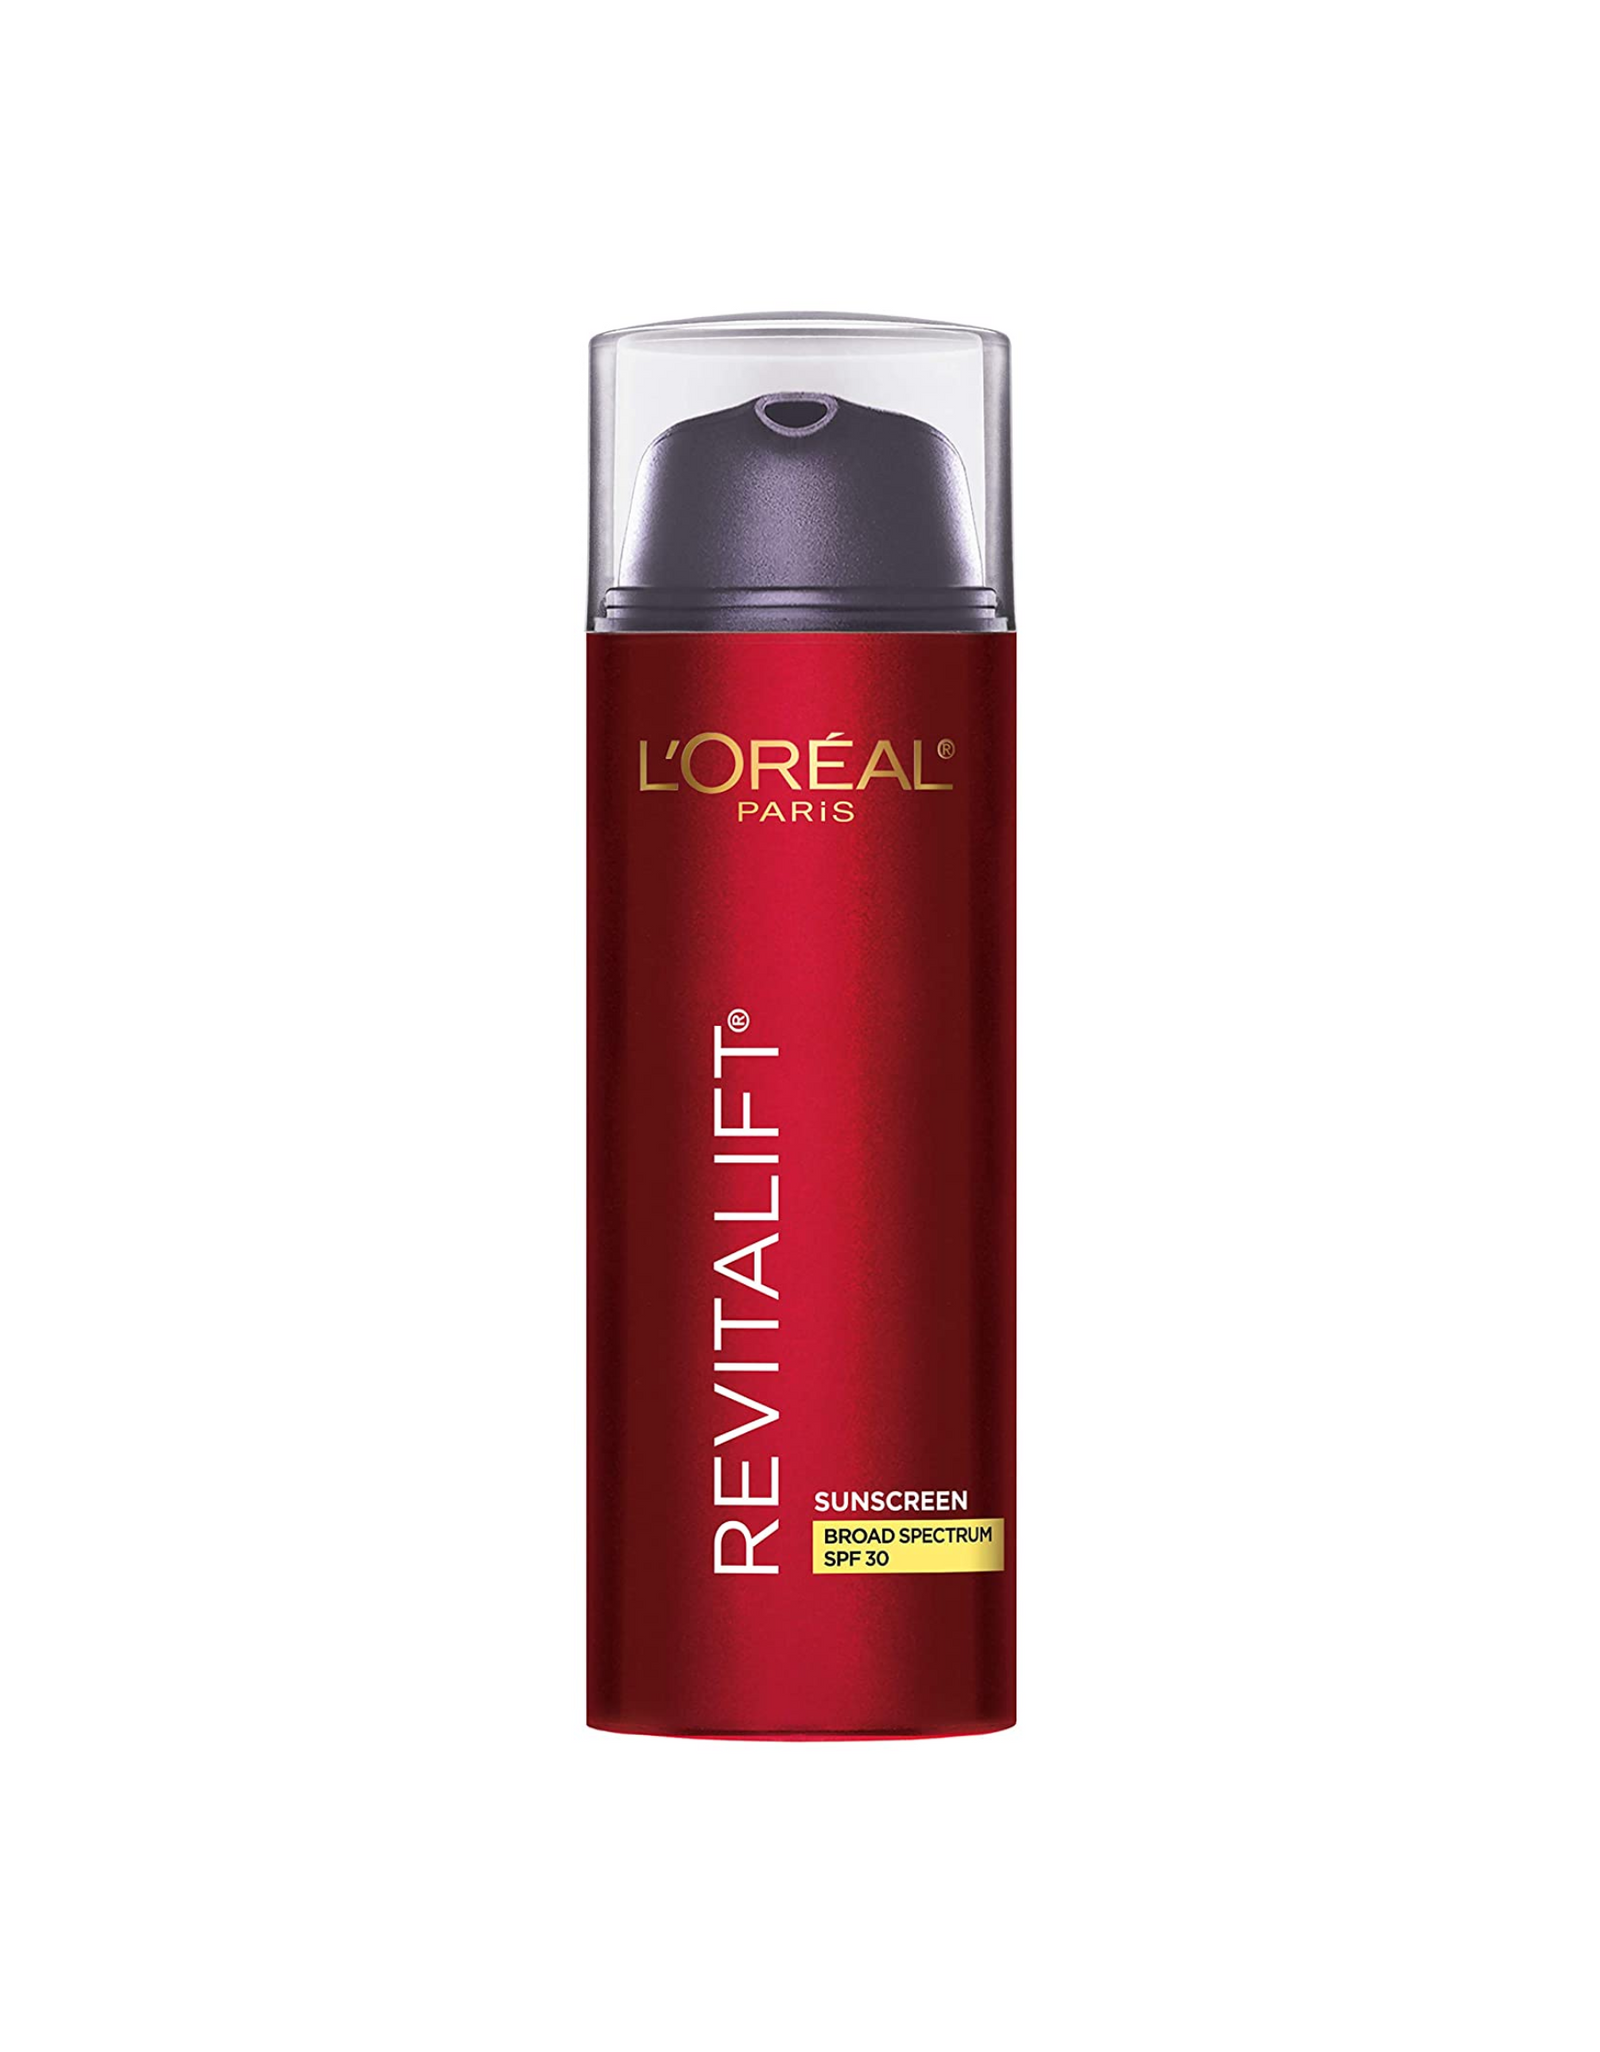 L'Oreal Paris Skincare Revitalift Triple Power Broad Spectrum SPF 30 Sunscreen, Anti-Aging Lotion, 1.7 fl oz